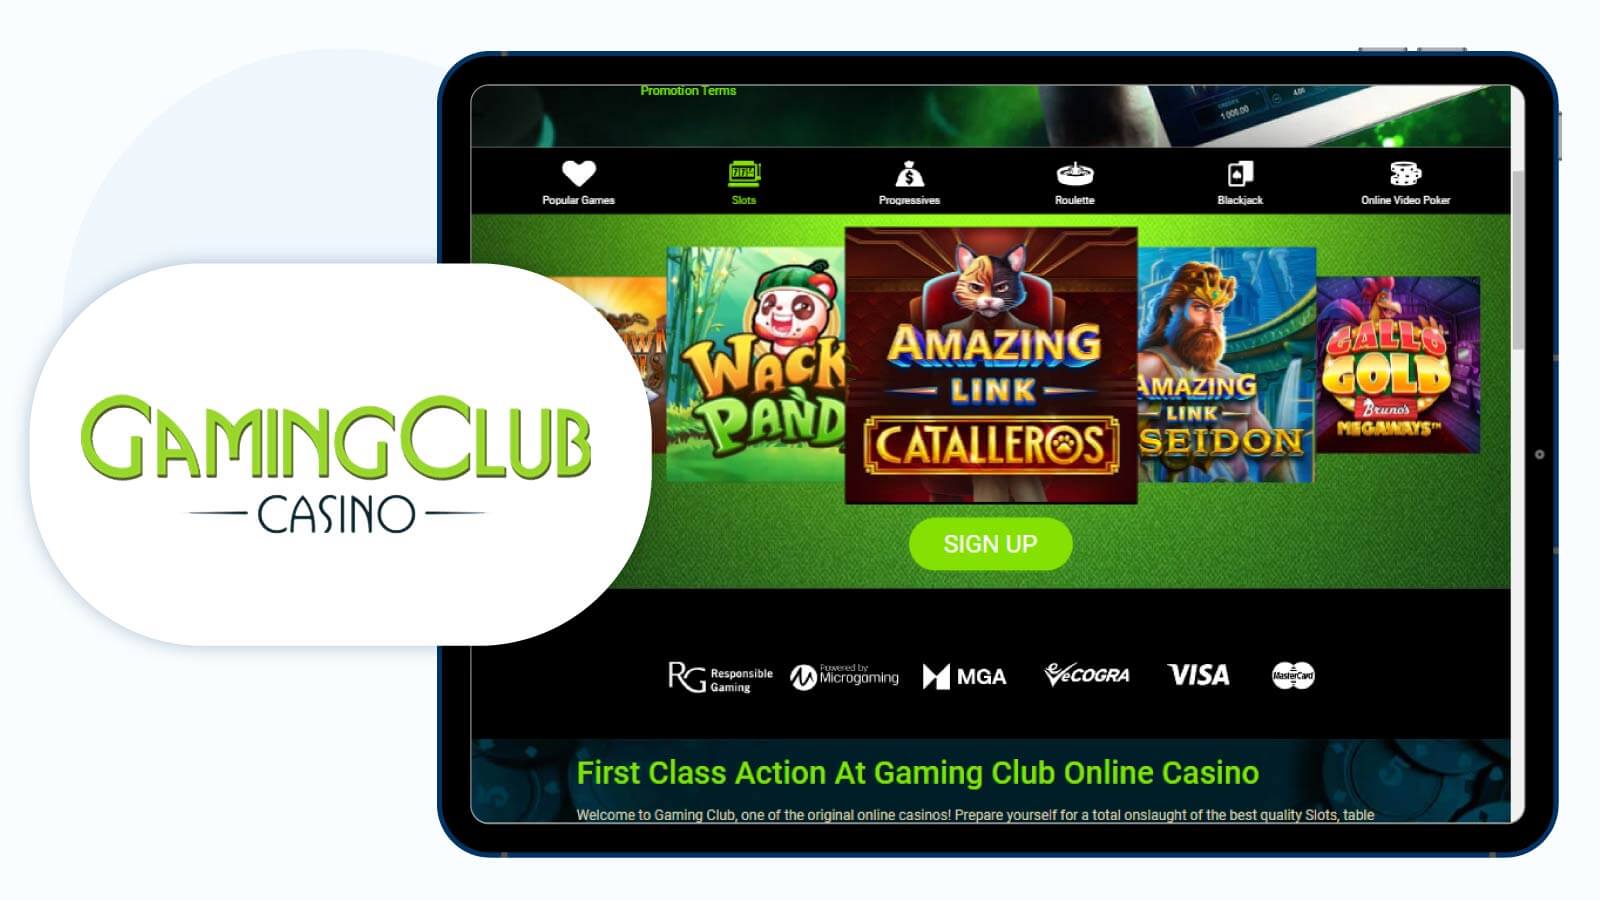 Gaming-Club-Casino-Deposit-$1